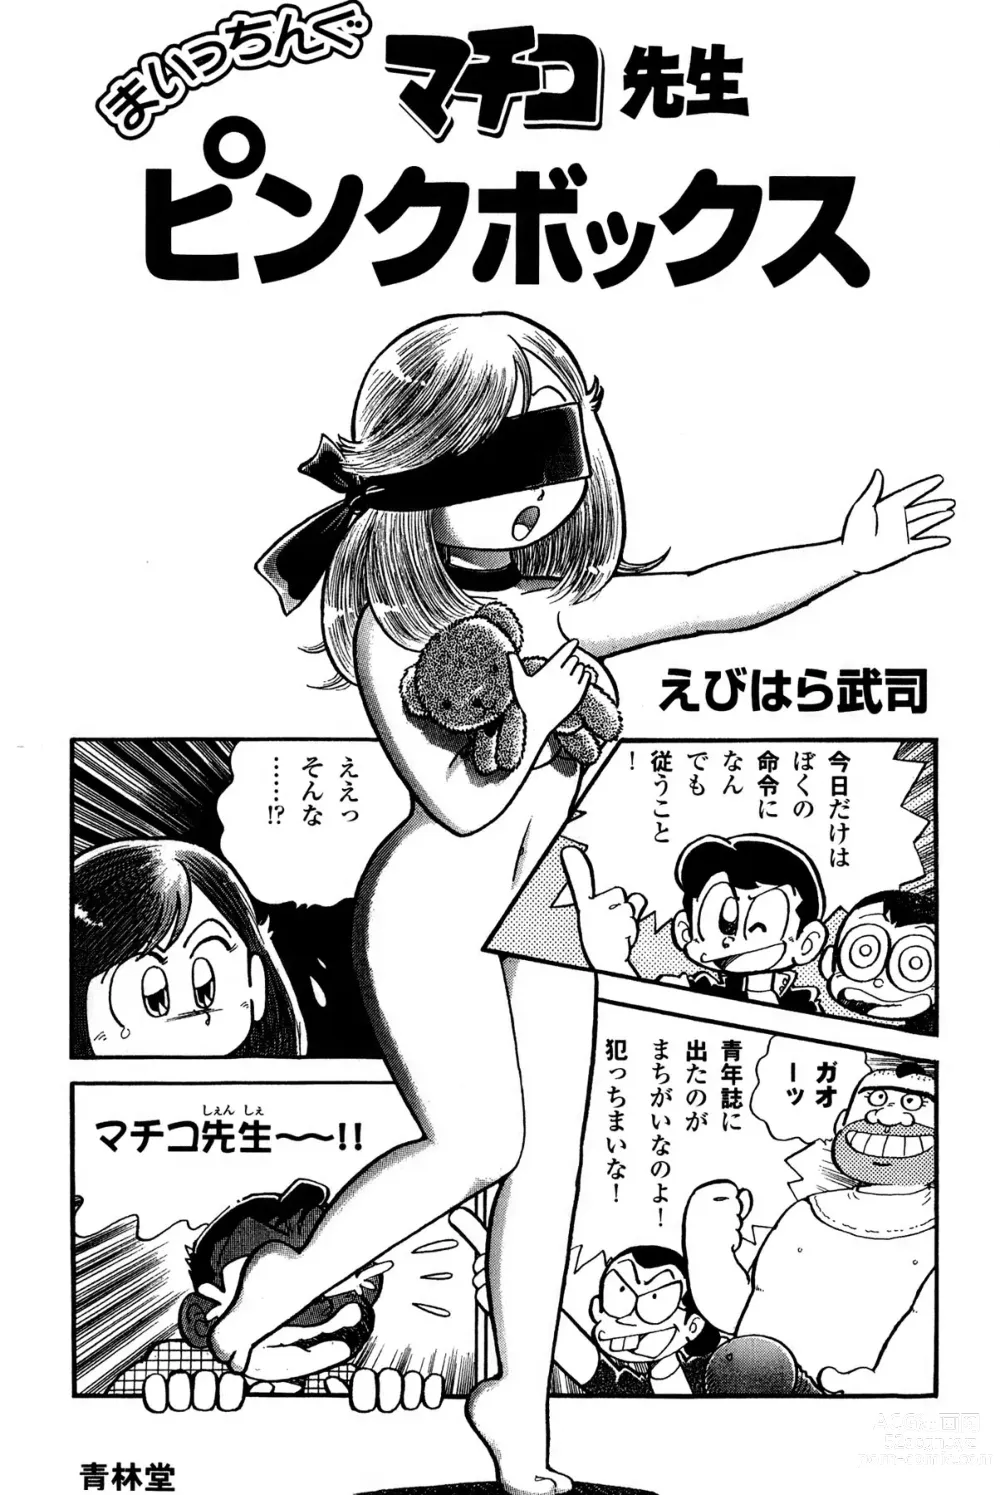 Page 4 of manga Maichiingu Machiko Sensei book pink